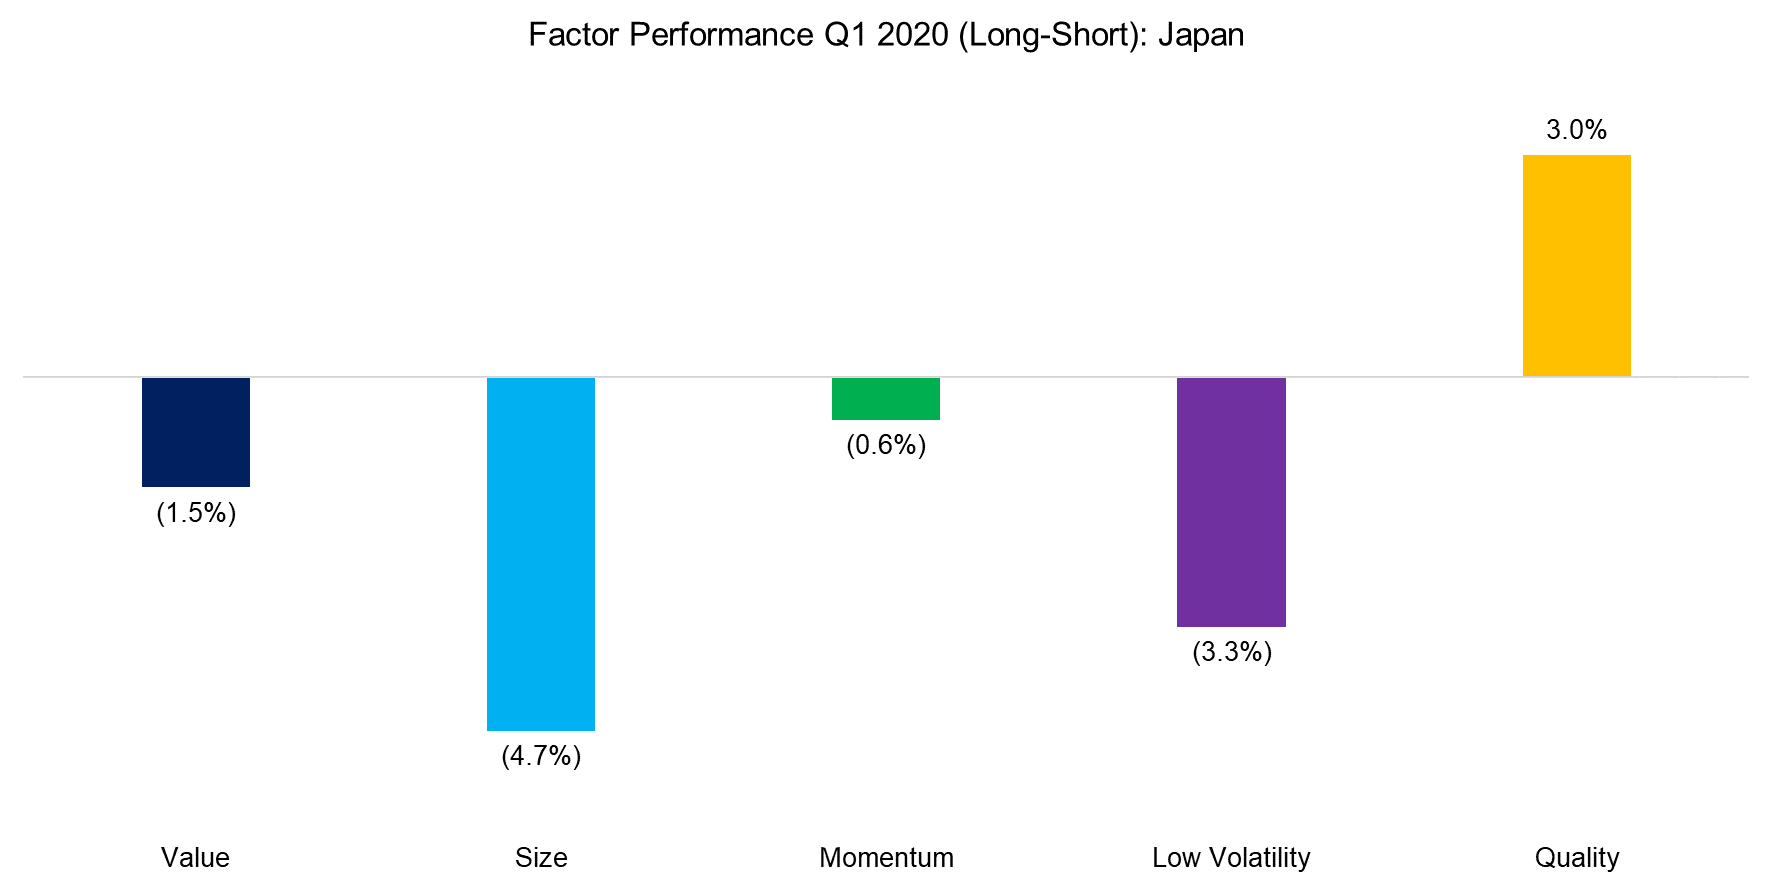 Factor Performance Q1 2020 (Long-Short) Japan